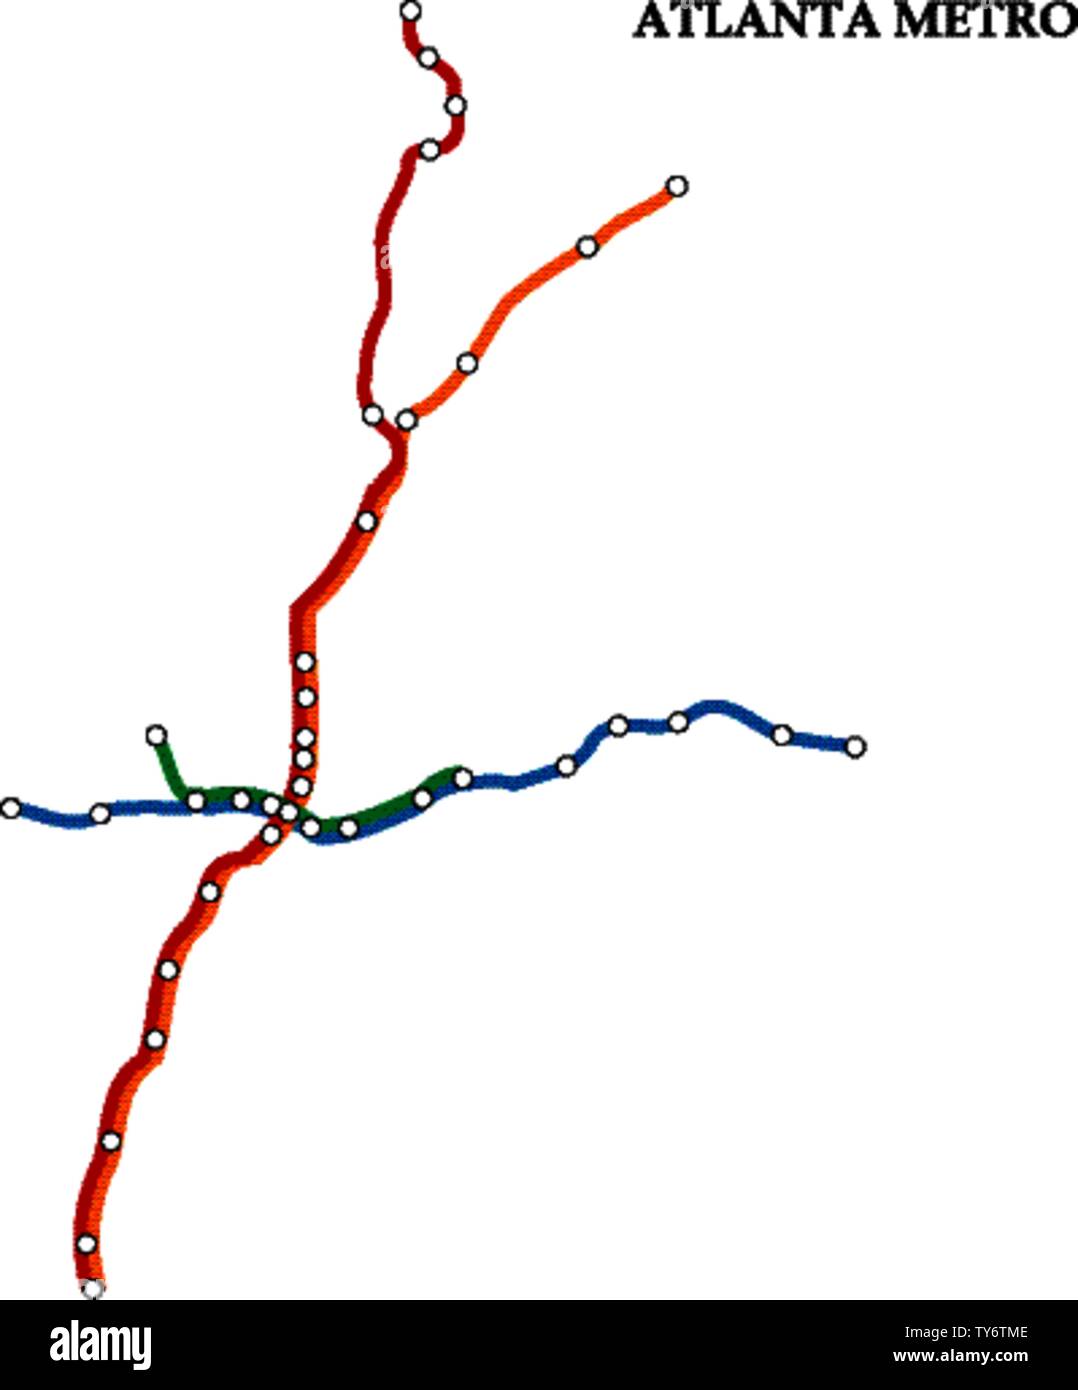 Karte der Atlanta metro, U-Bahn, Vorlage der City Transport System für U-Straße. Stock Vektor